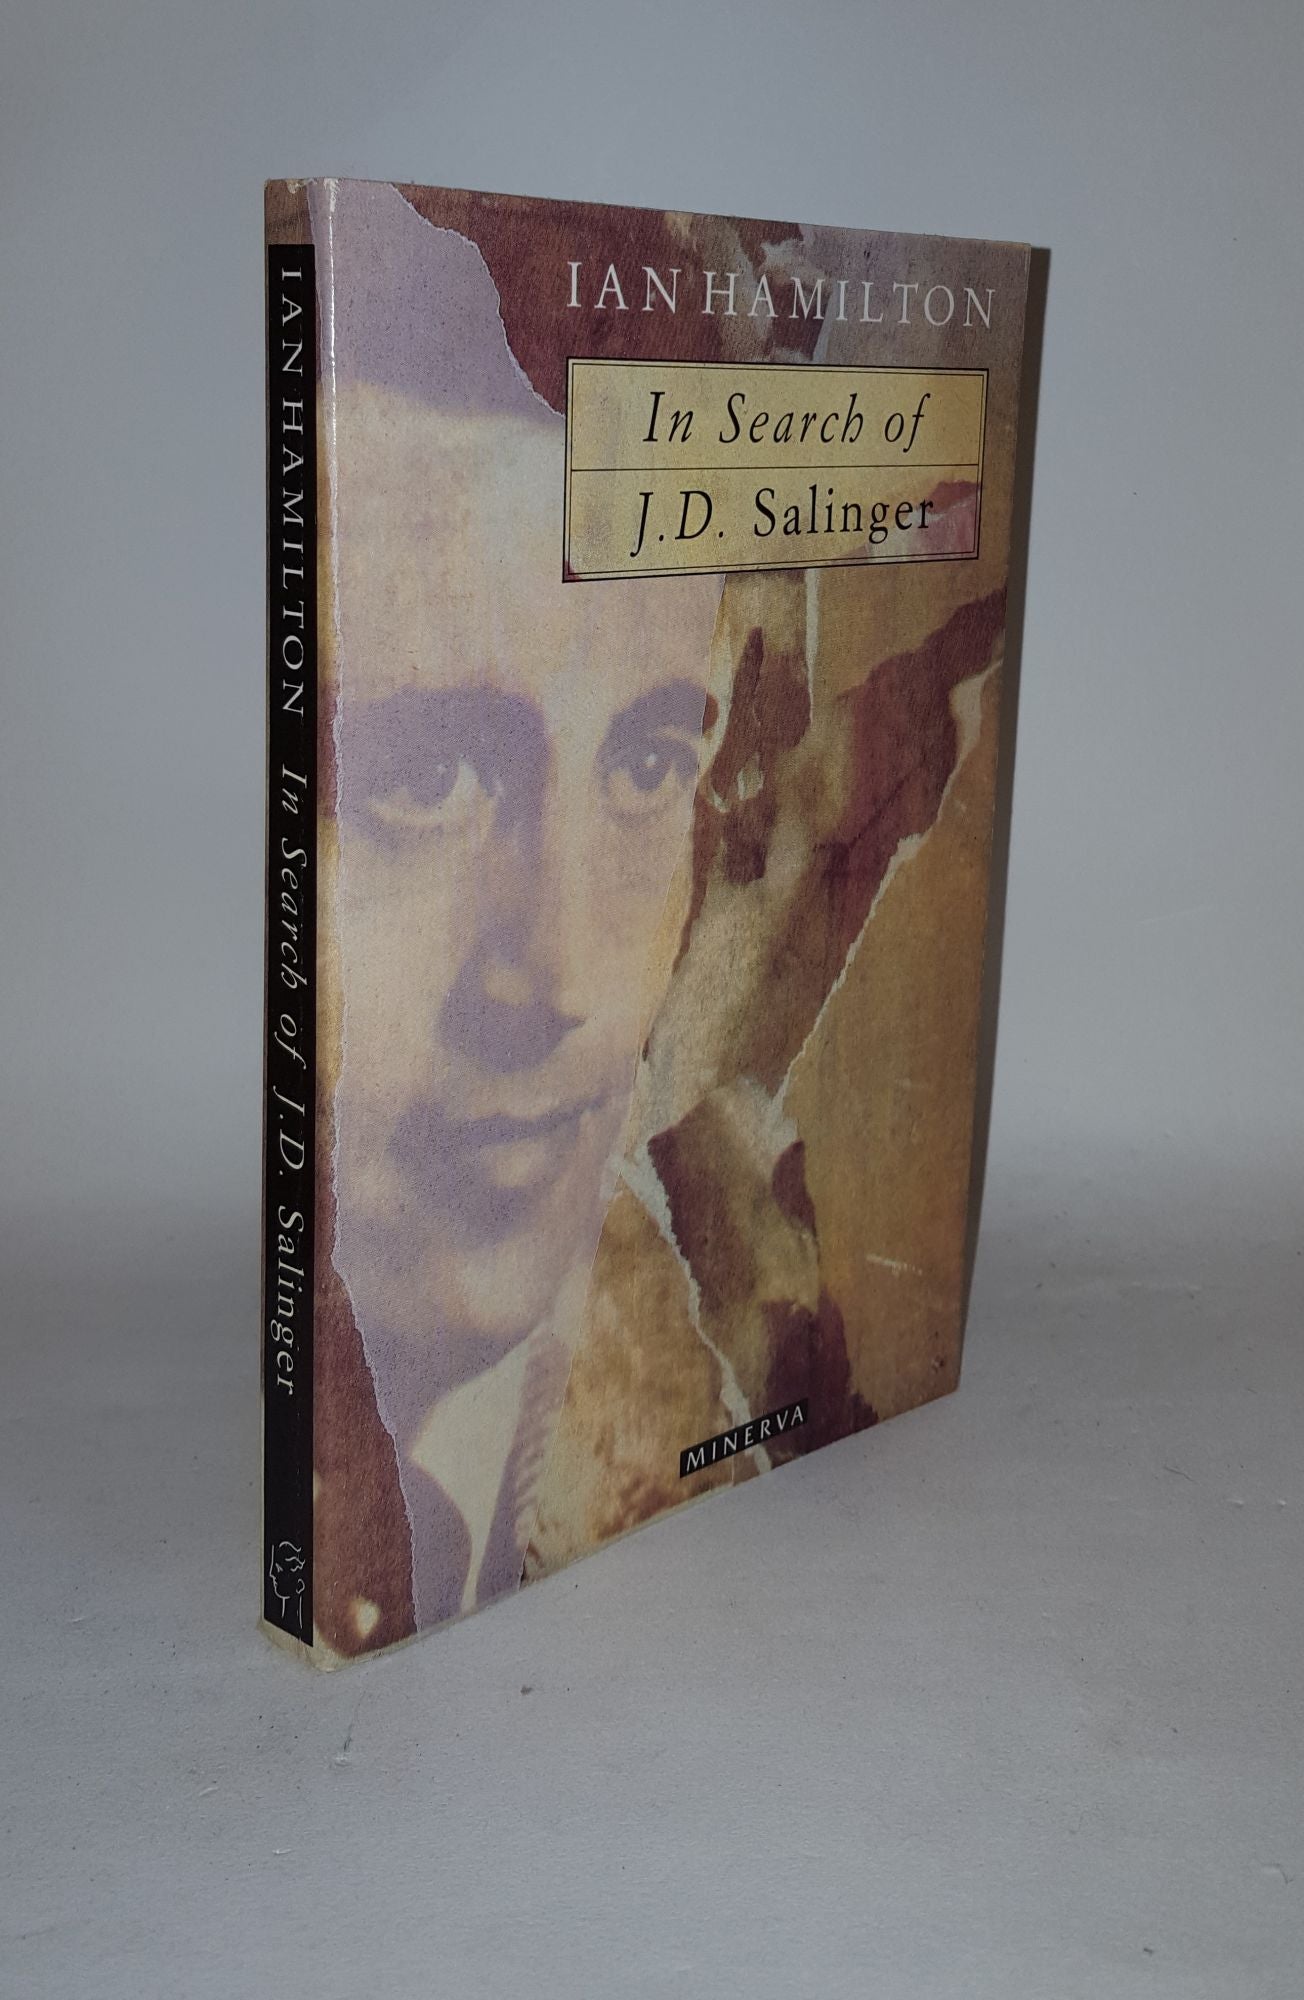 HAMILTON Ian - In Search of J.D. Salinger